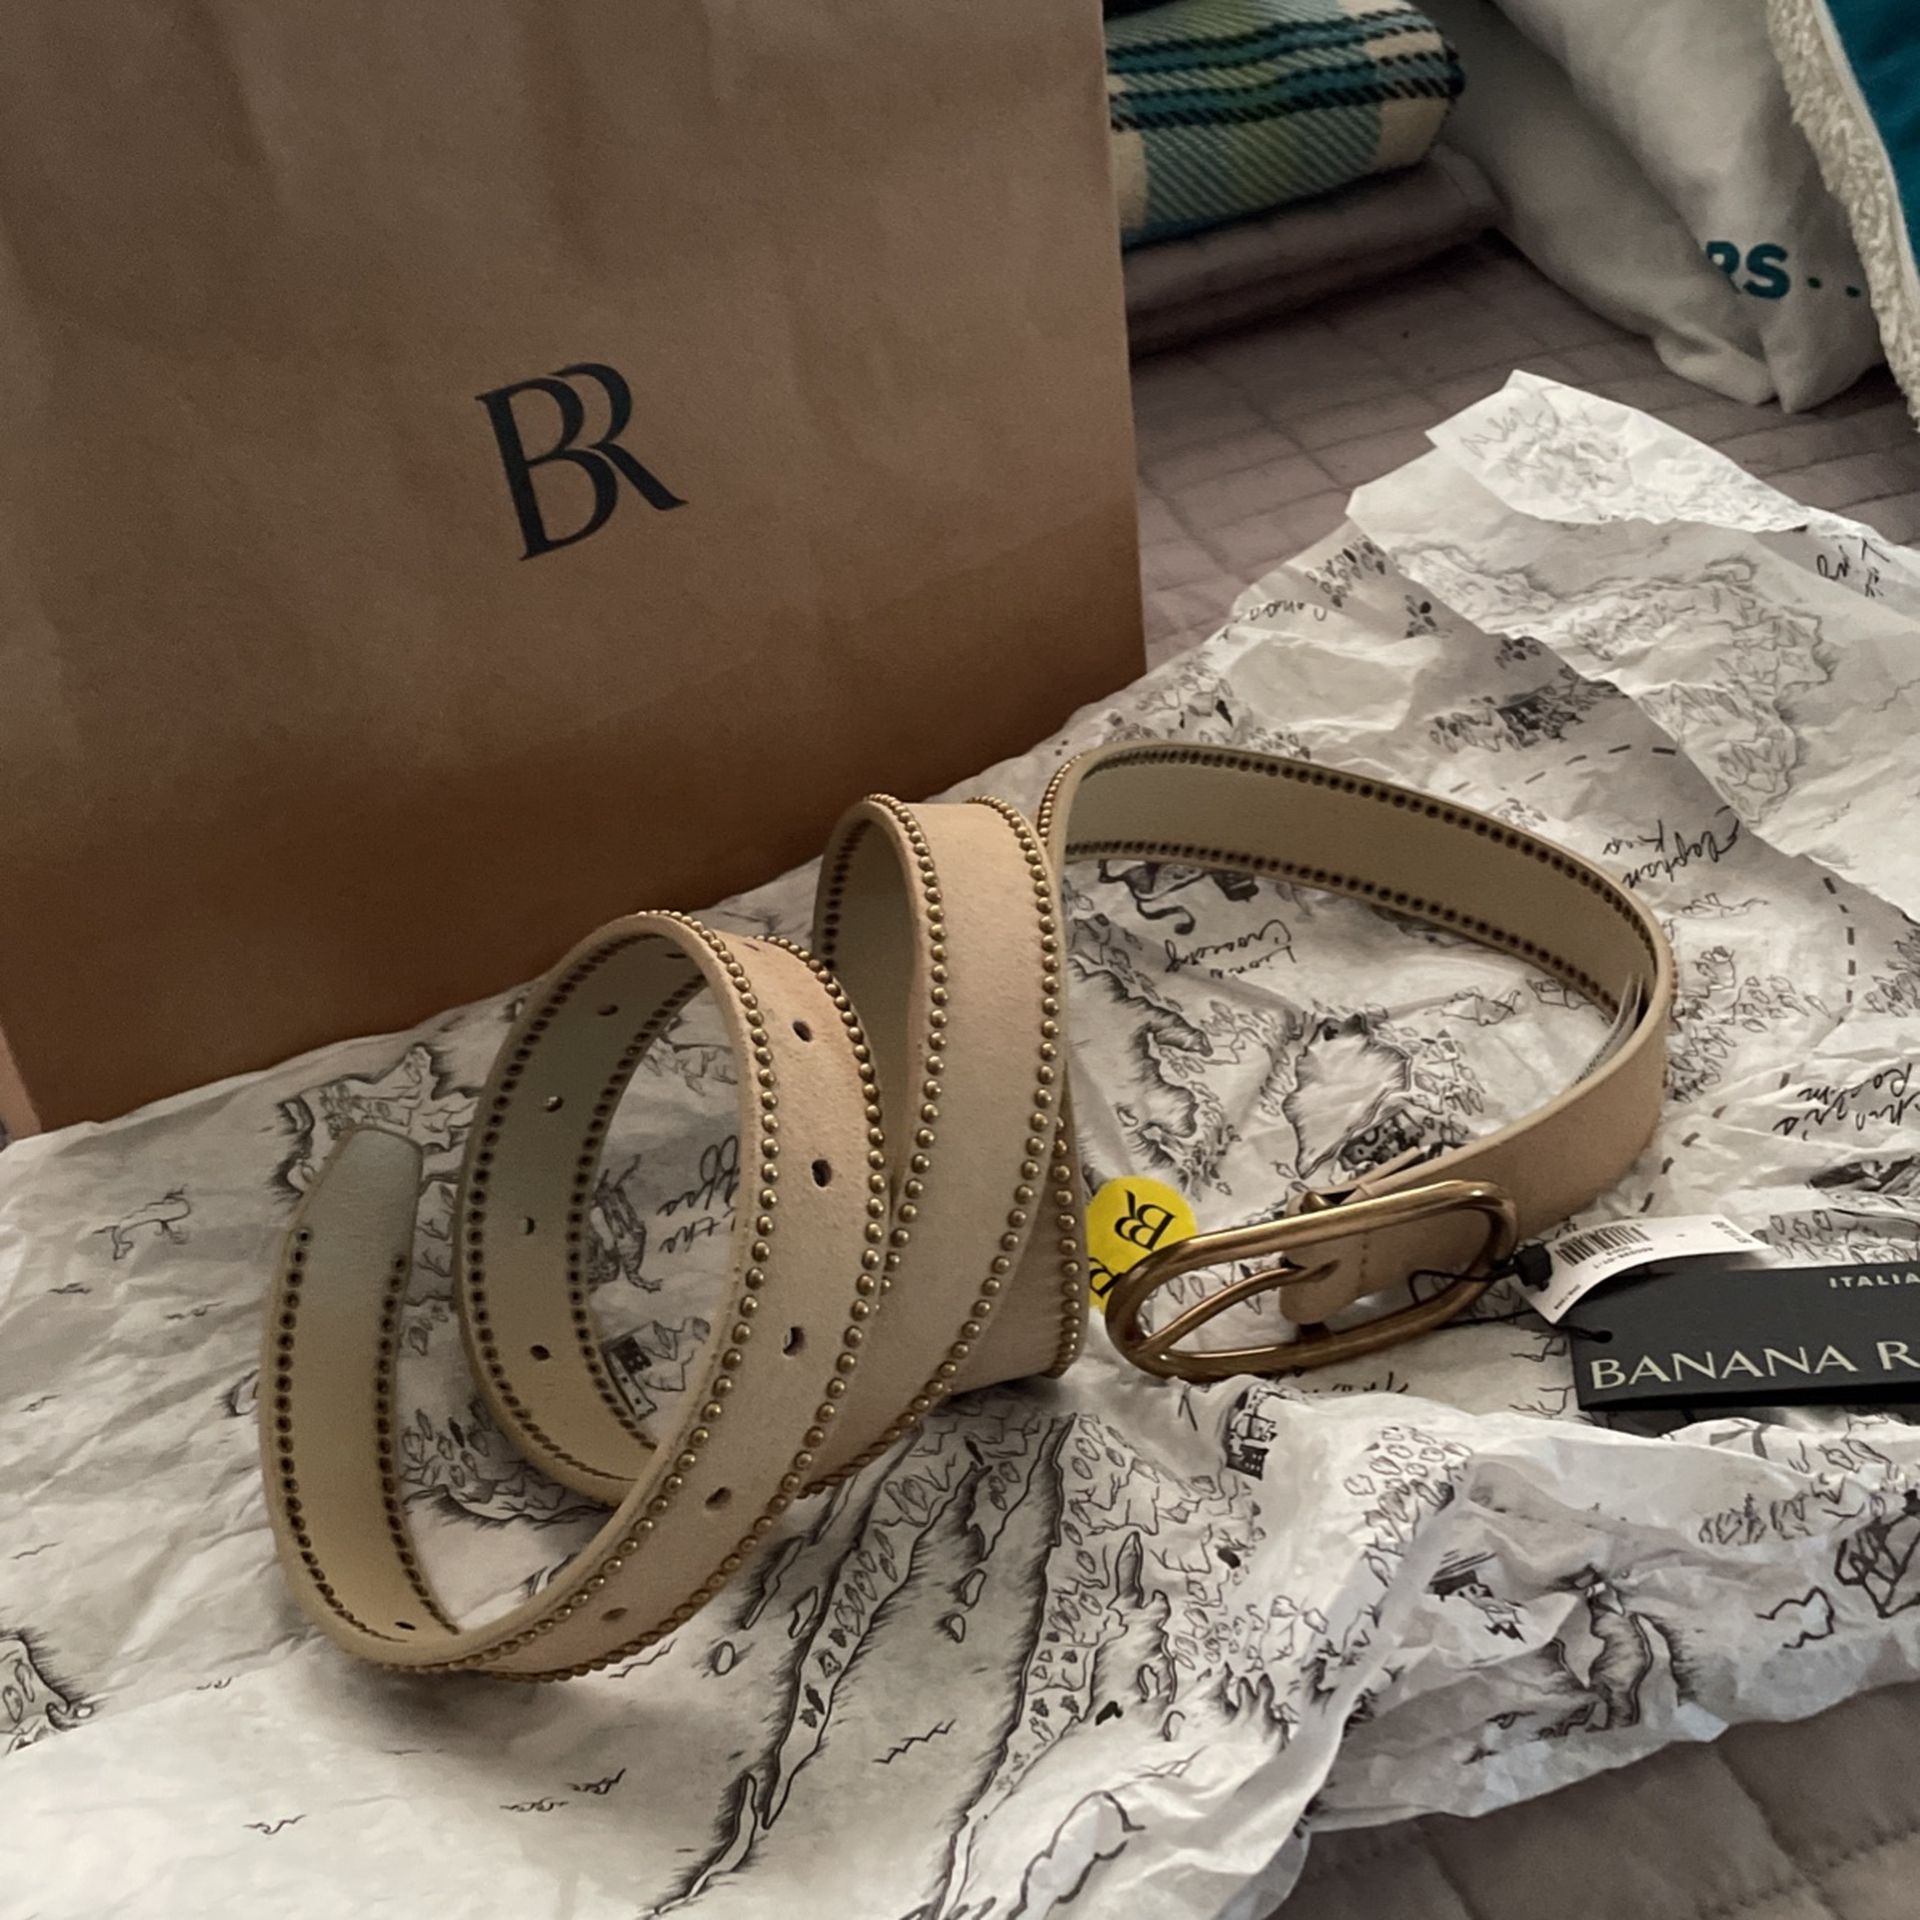 Banana Republic Suede Italian Leather Belt